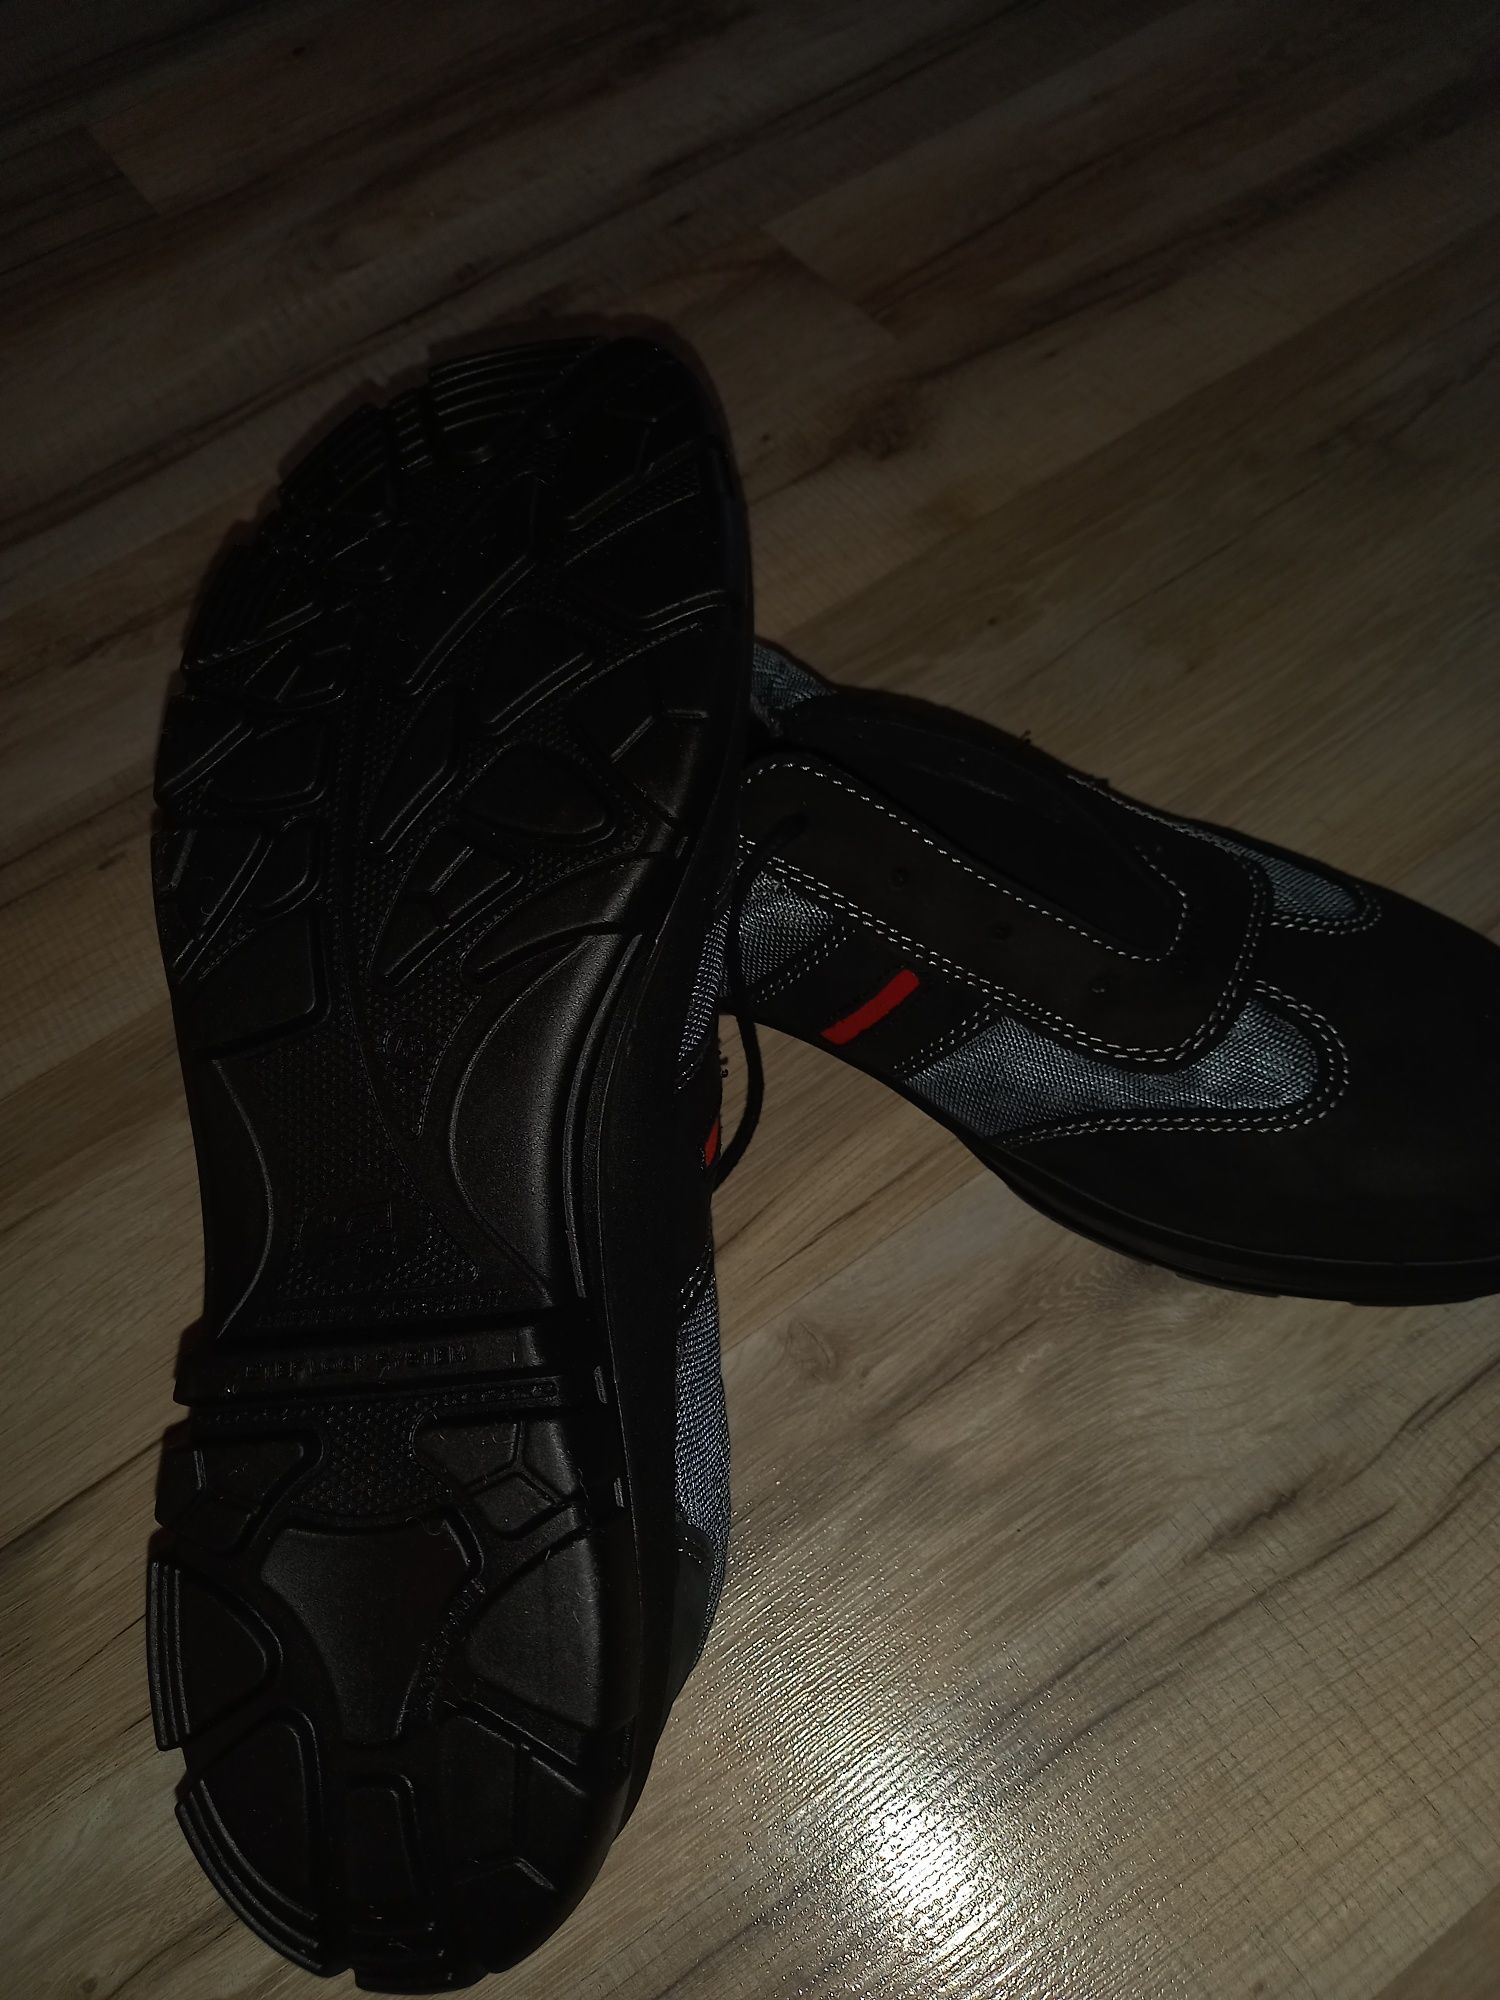 PPO 503 S1 SRC ochronne buty robocze kompozytowy podnosek